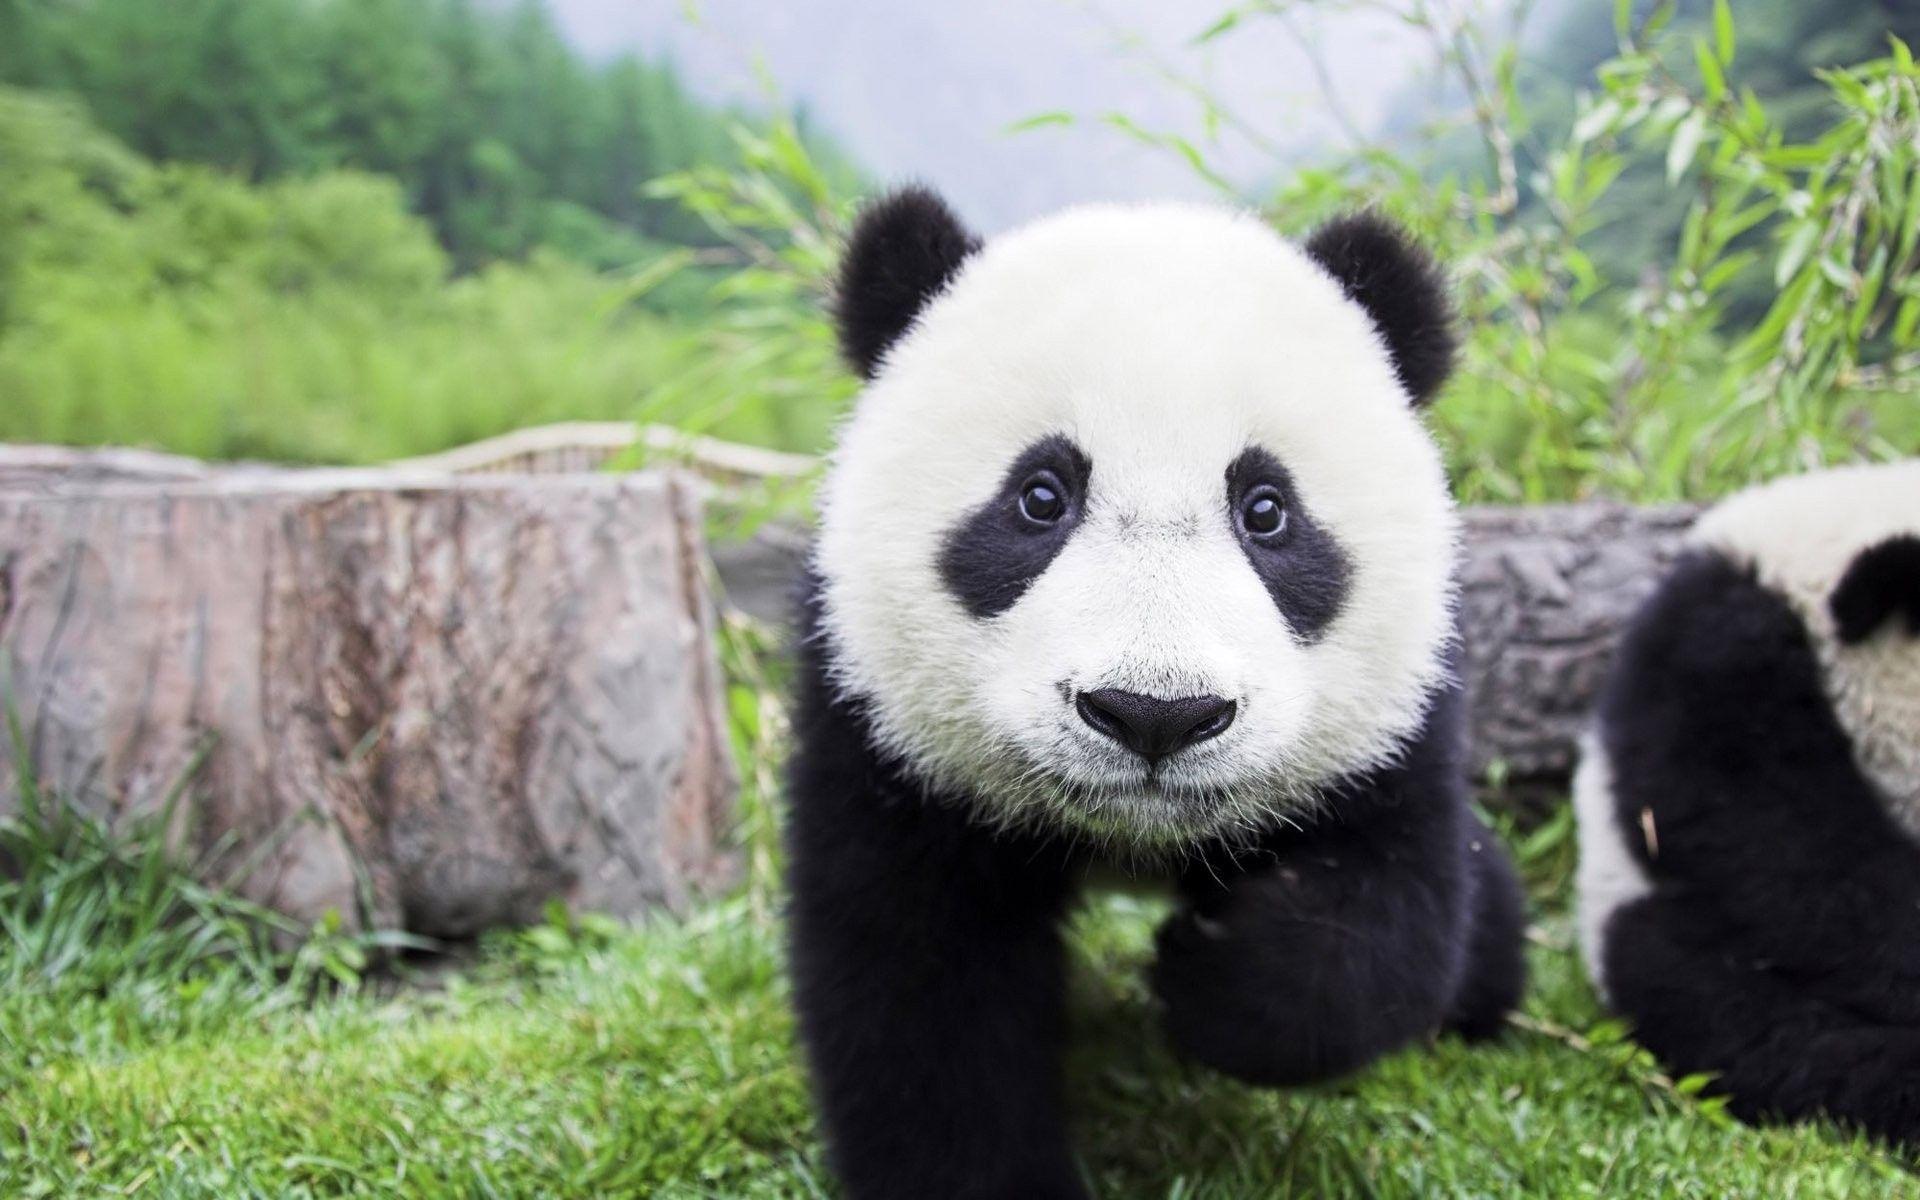 Baby Animals: Cute Pandas Panda Bears Baby Baer Animals Photo